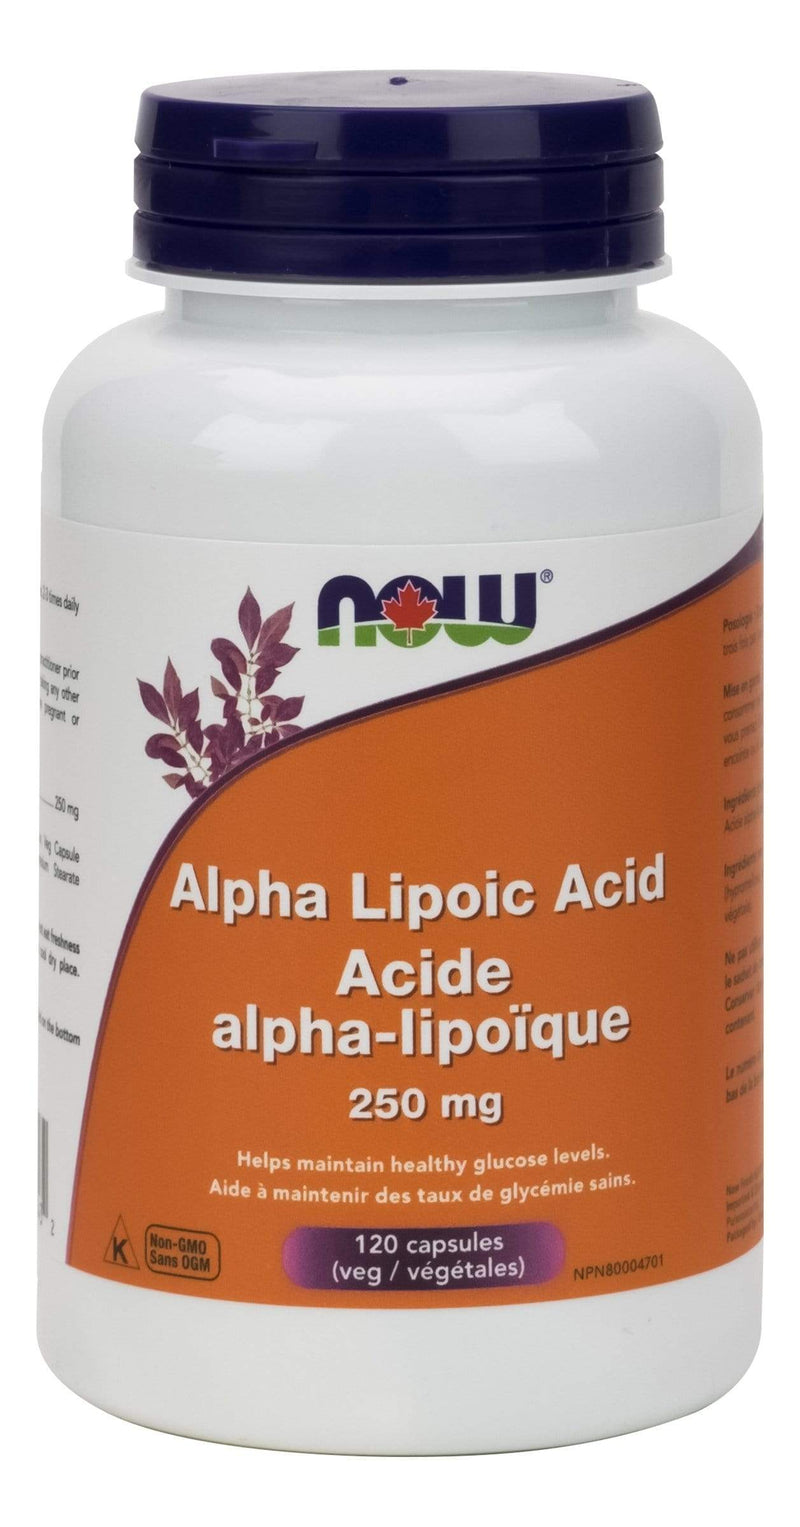 NOW, Alpha Lipoic Acid, 250mg, 120 Veg Capsules